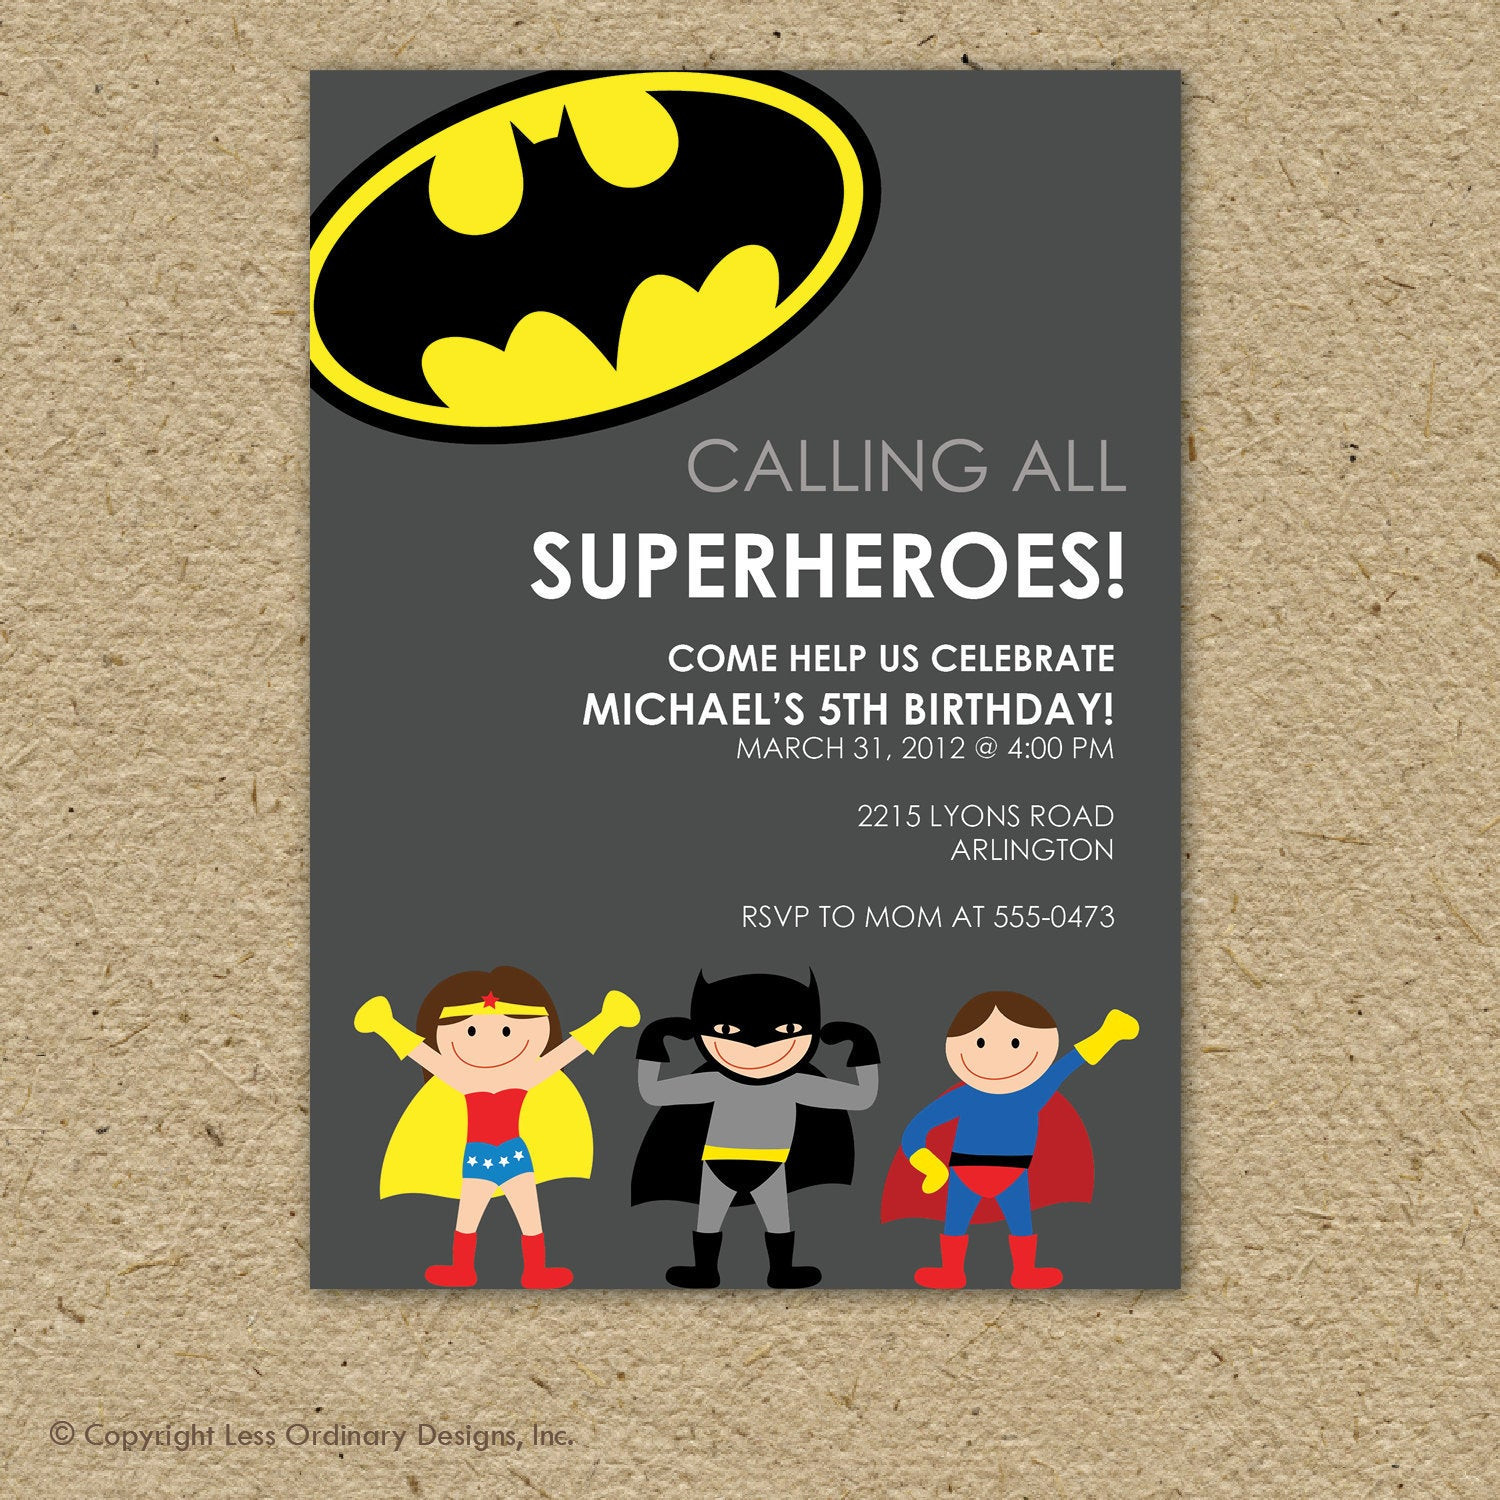 Superhero Birthday Invitation
 Batman super hero birthday party invitation by